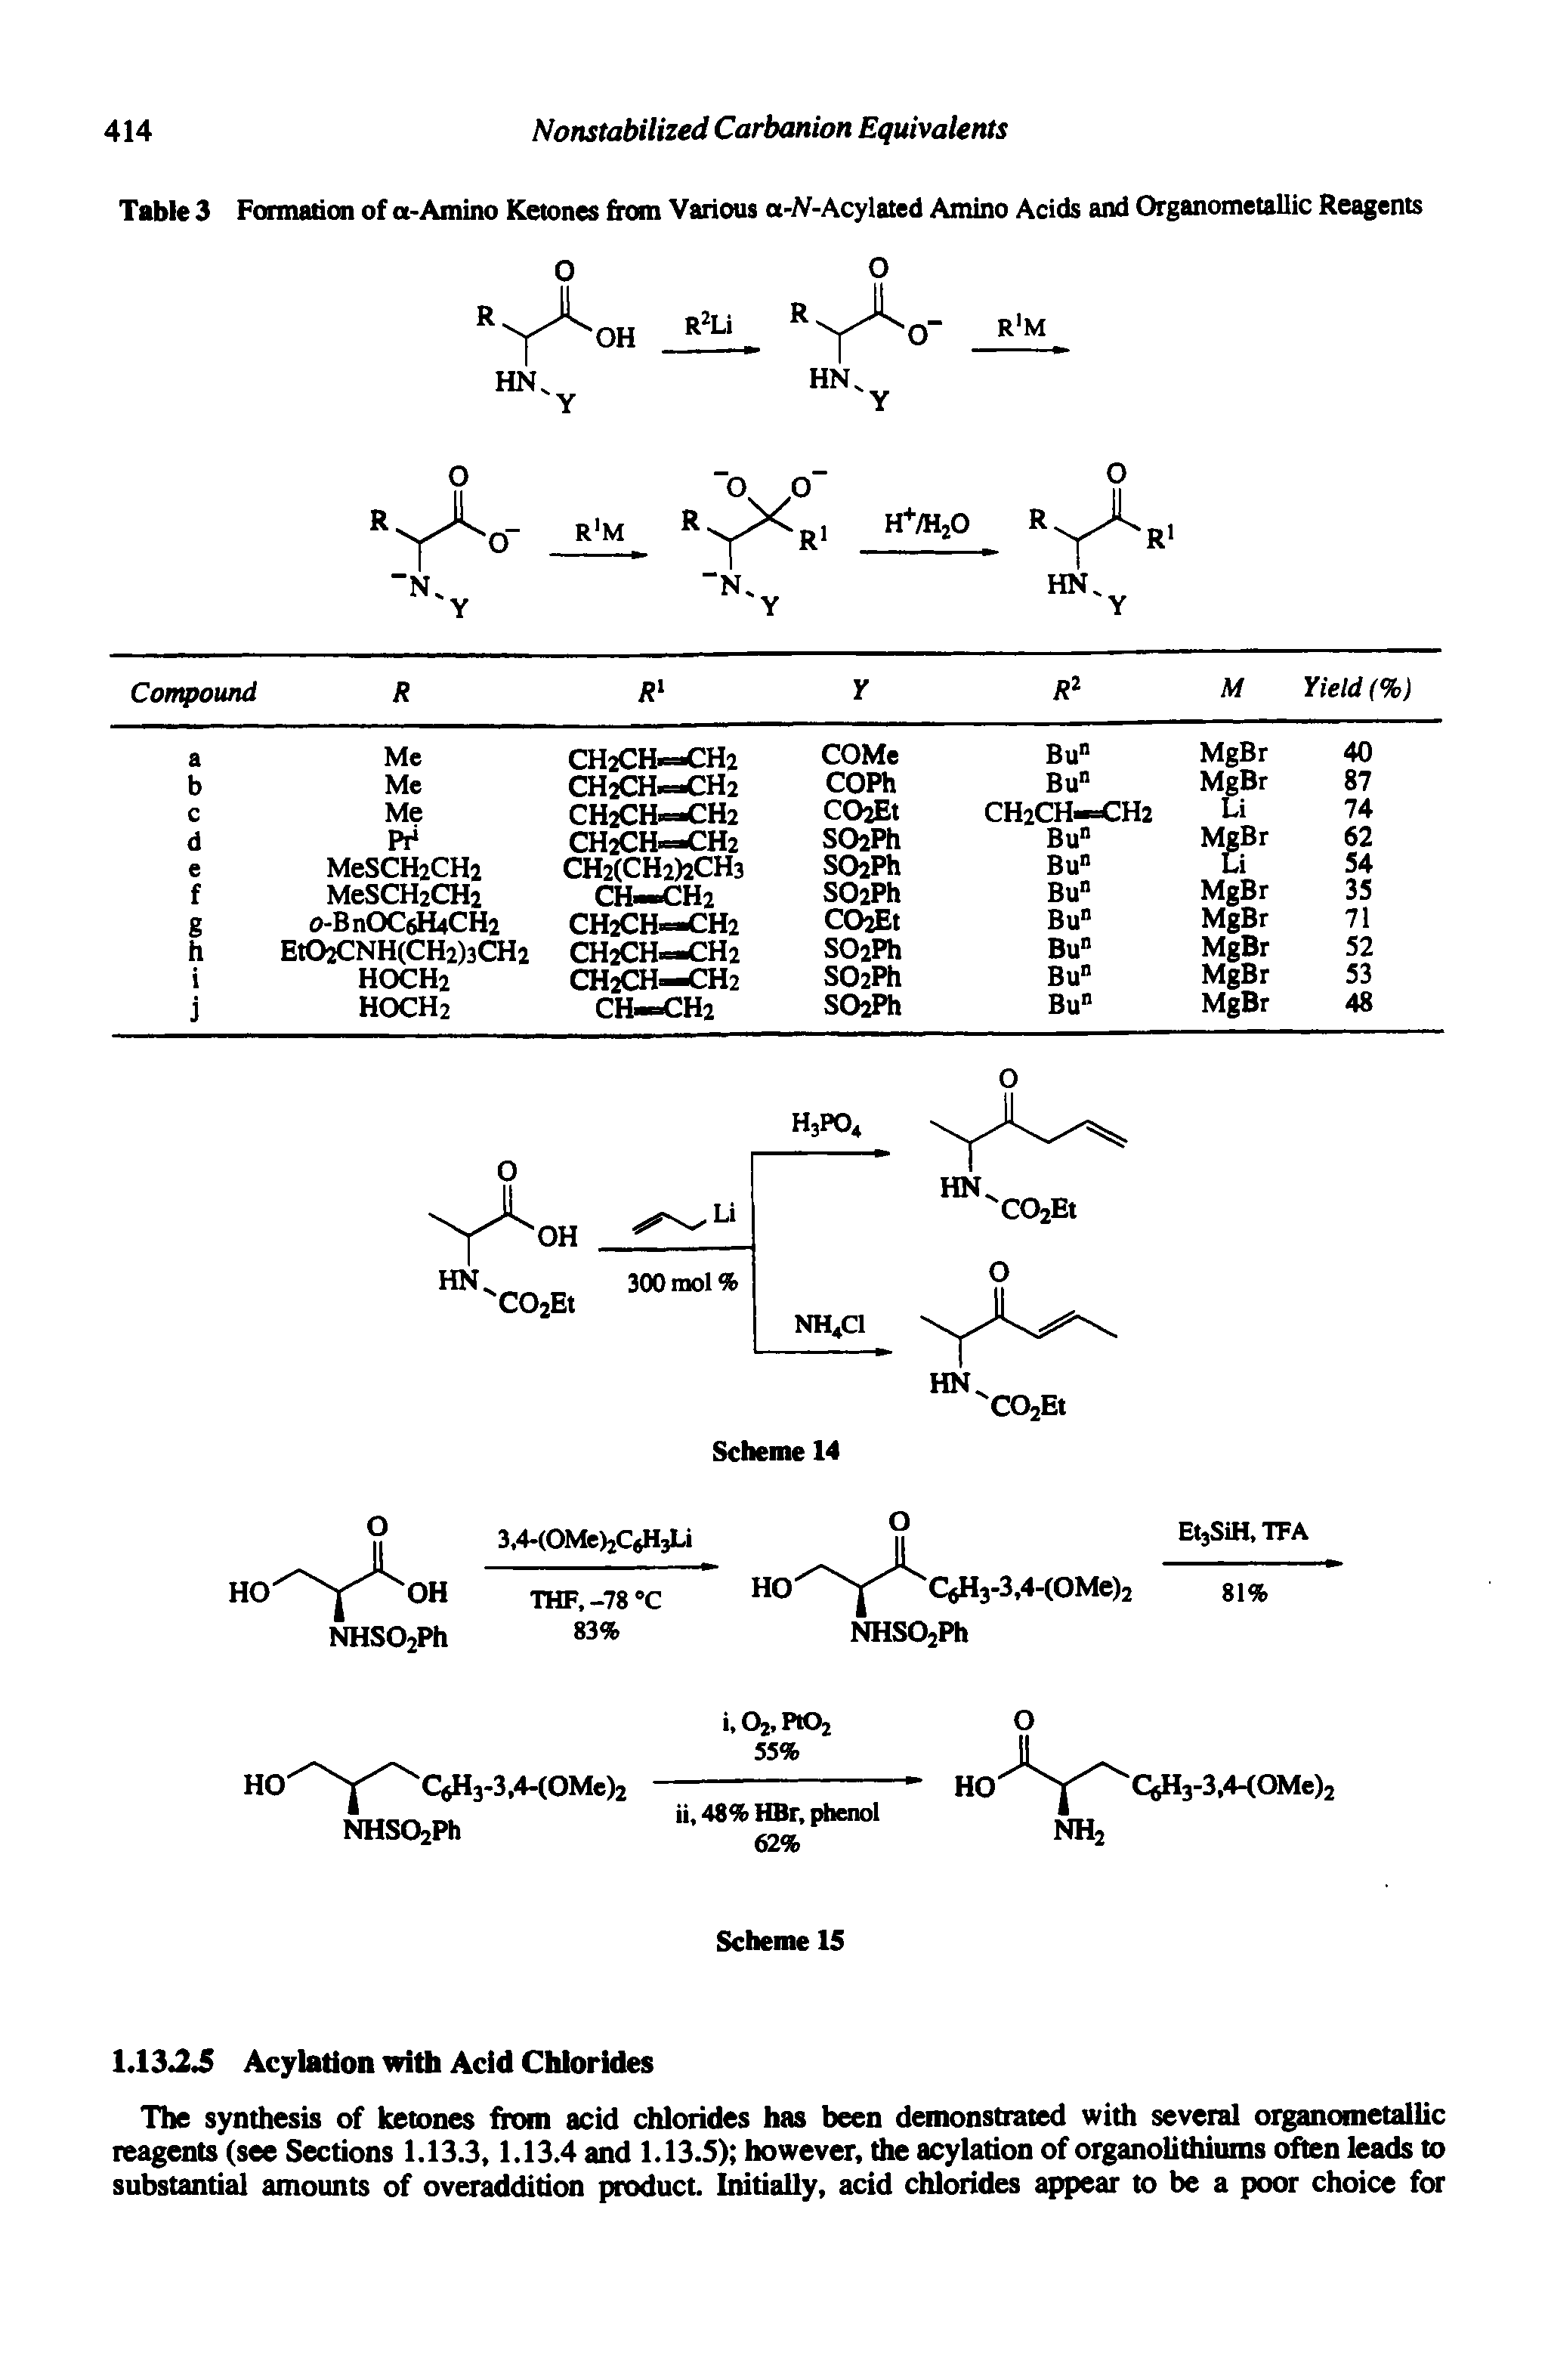 Table 3 Fonnation of a-Amino Ketones from Various o-V-Acylated Amino Acids and Organometallic Reagents...